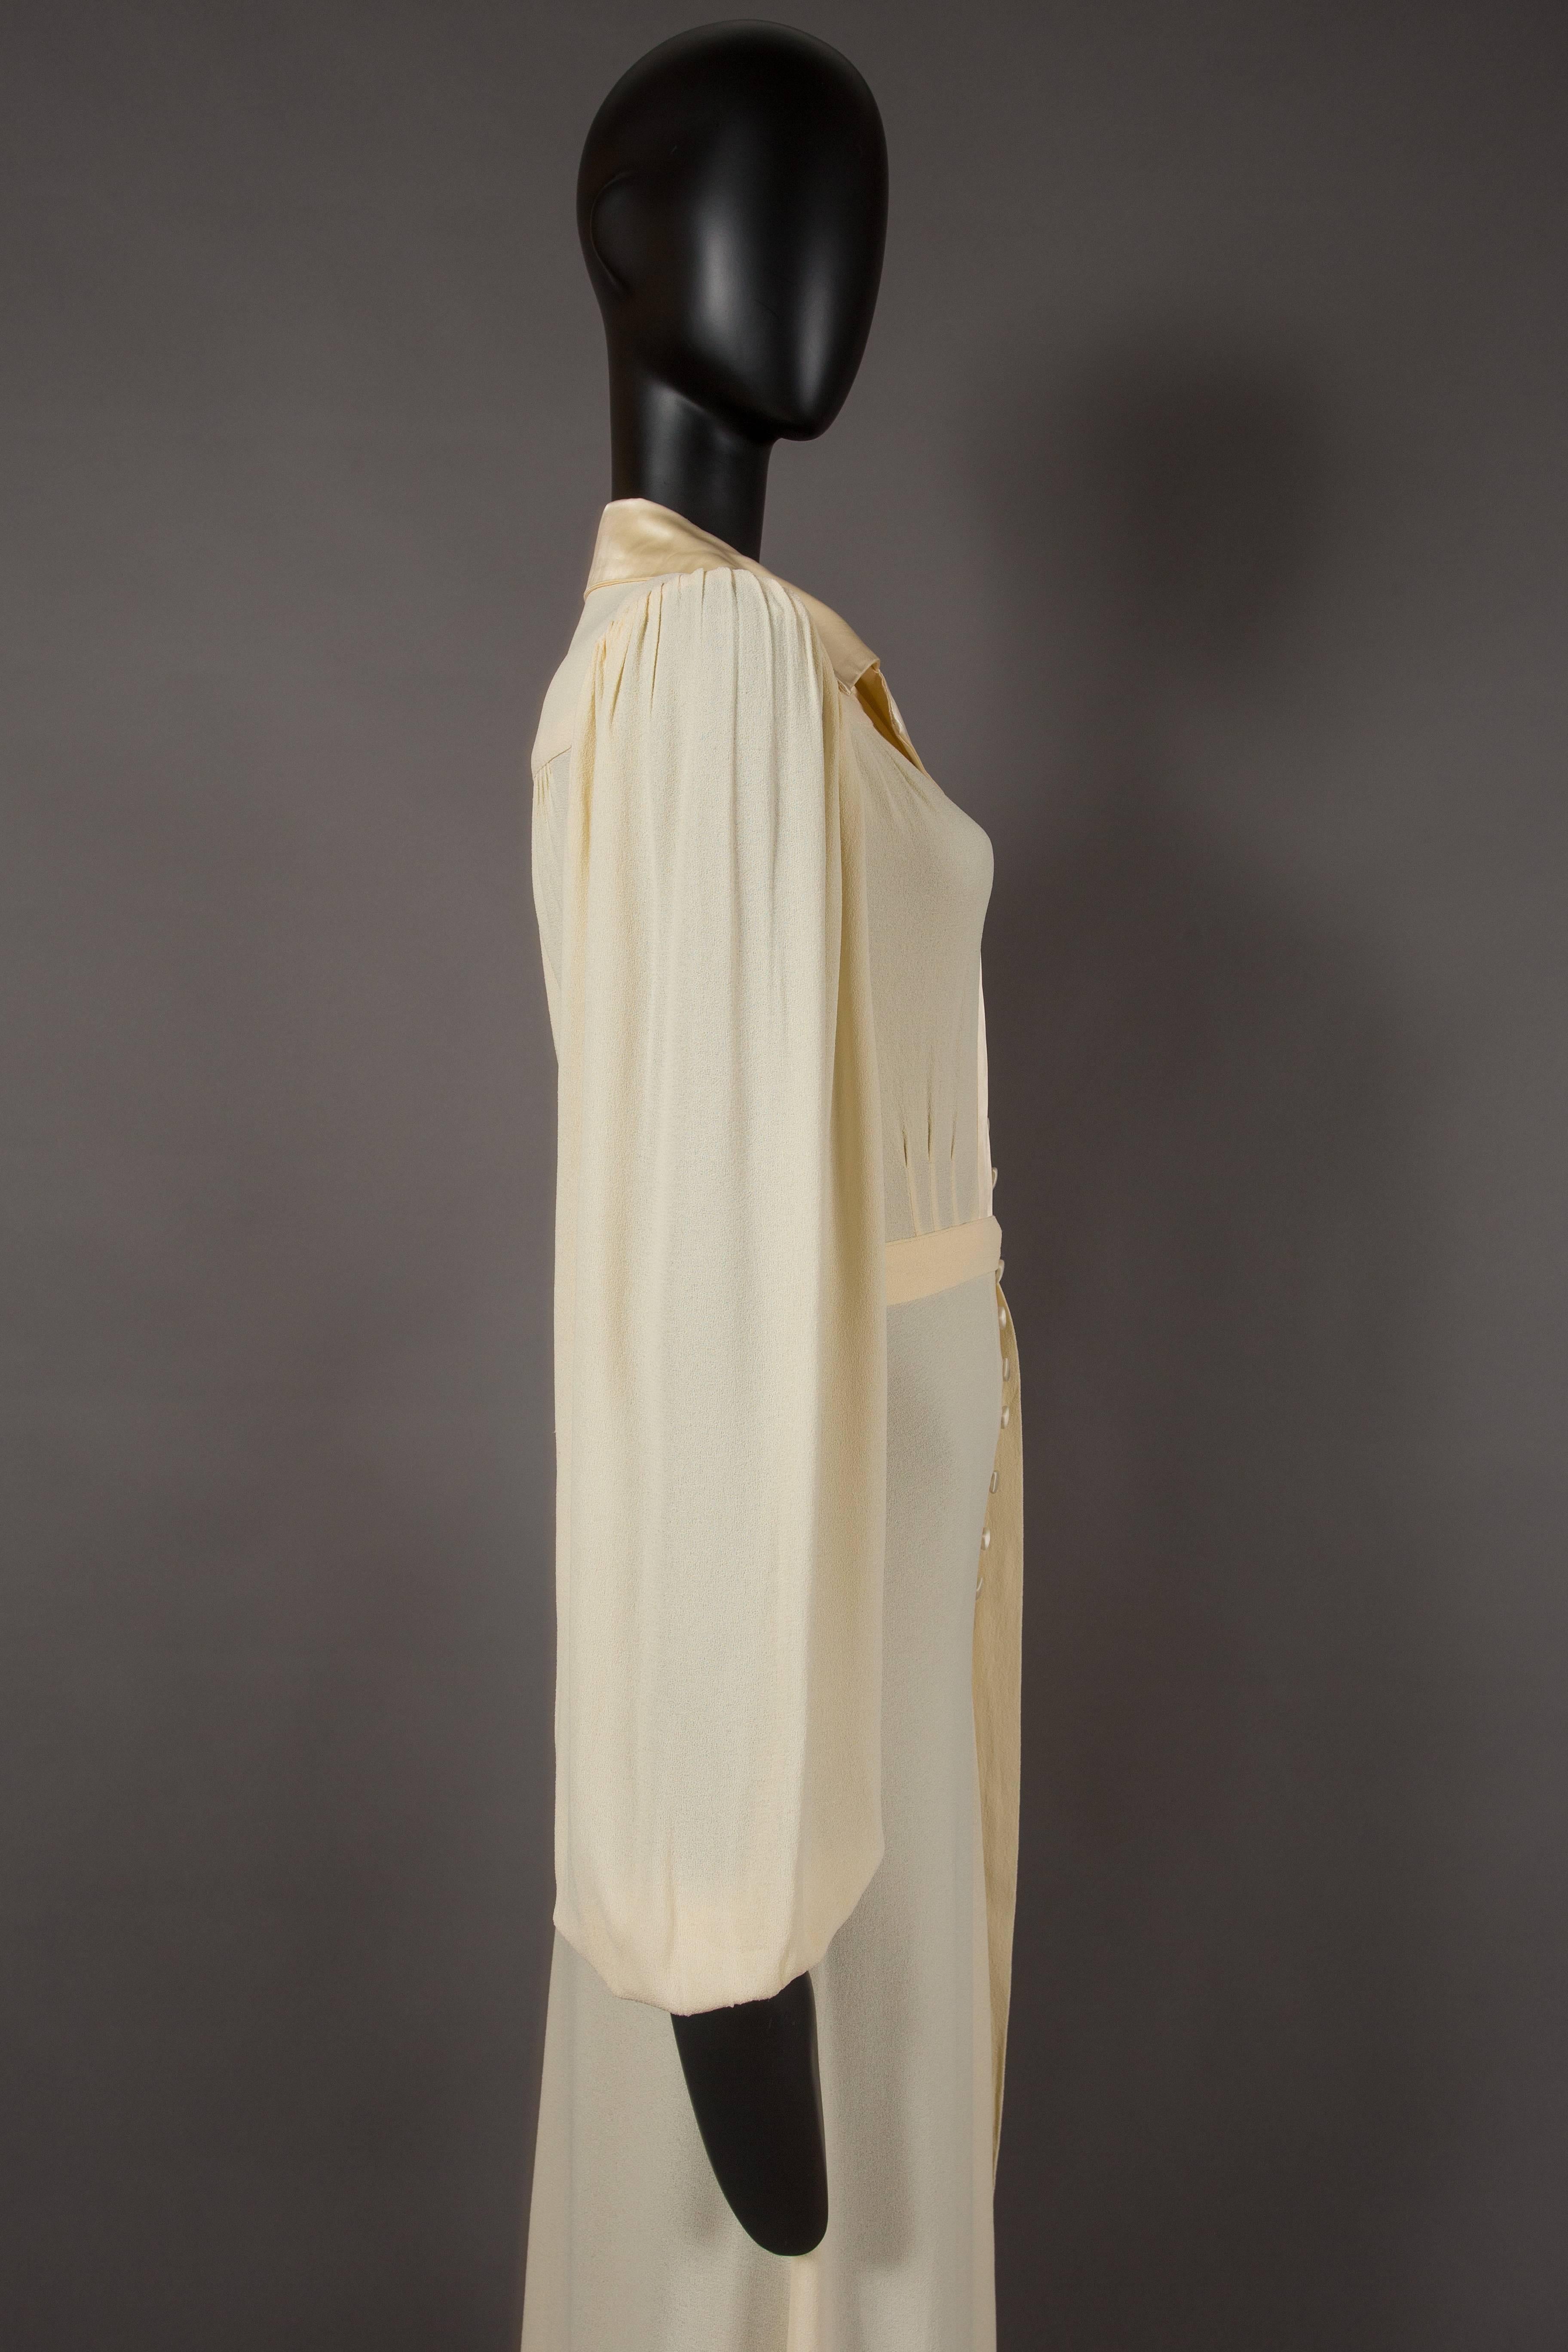 Women's Ossie Clark ivory moss crepe collared evening dress with satin trim, circa 1974